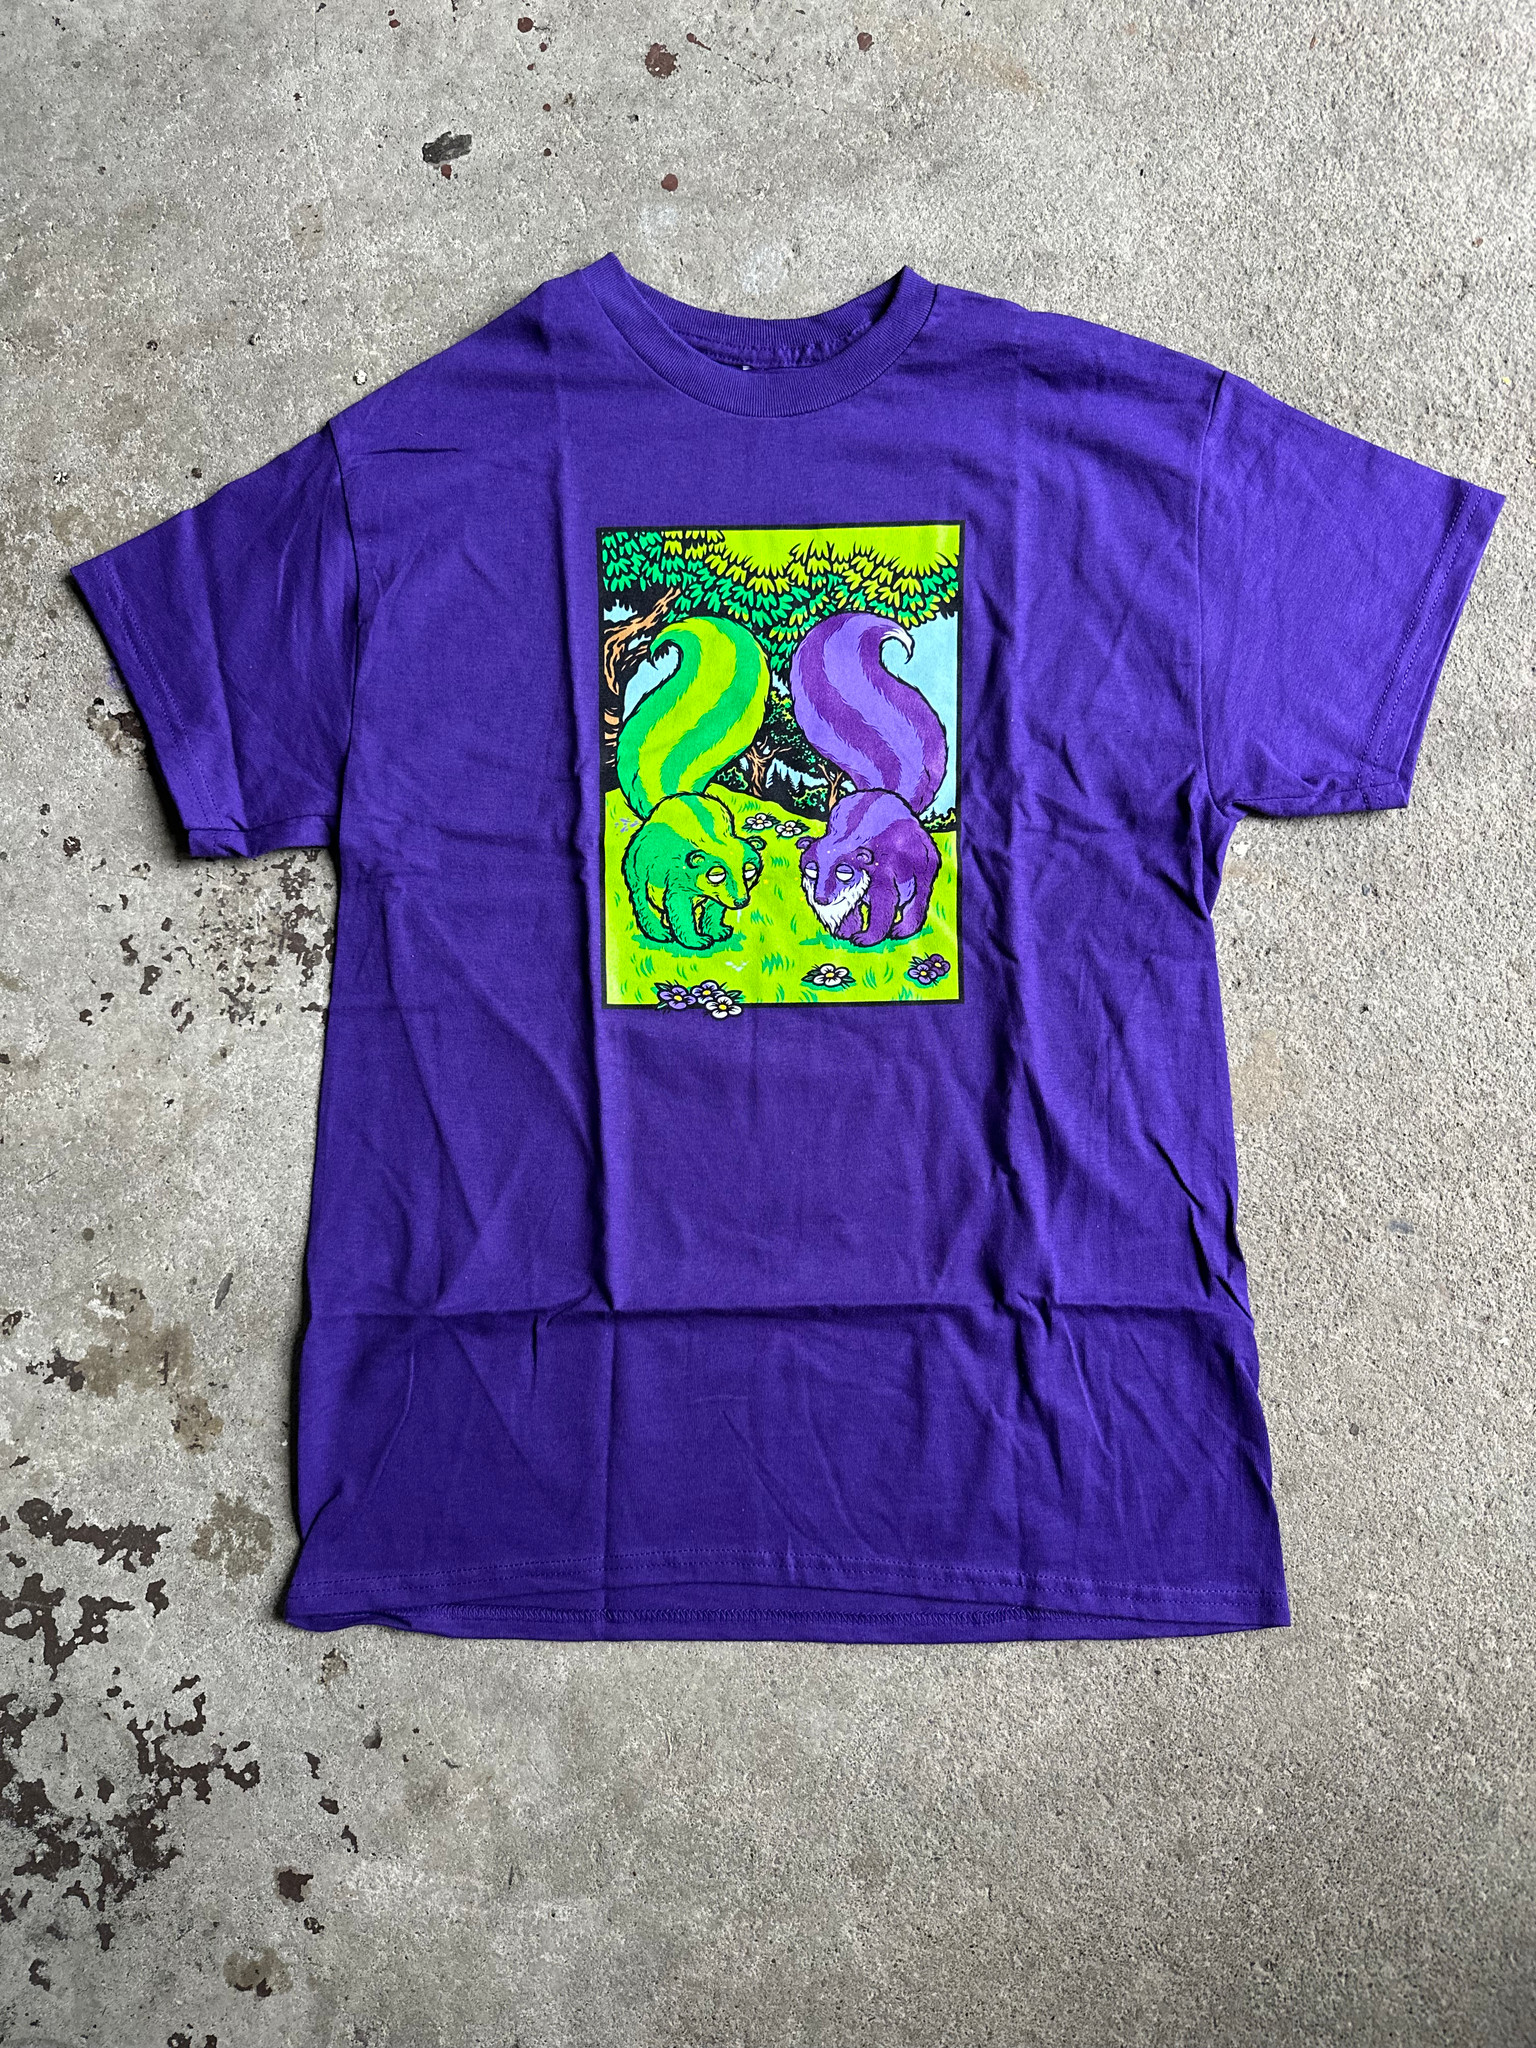 StrangeLove Skunks T-Shirt (Available in 3 Colors)